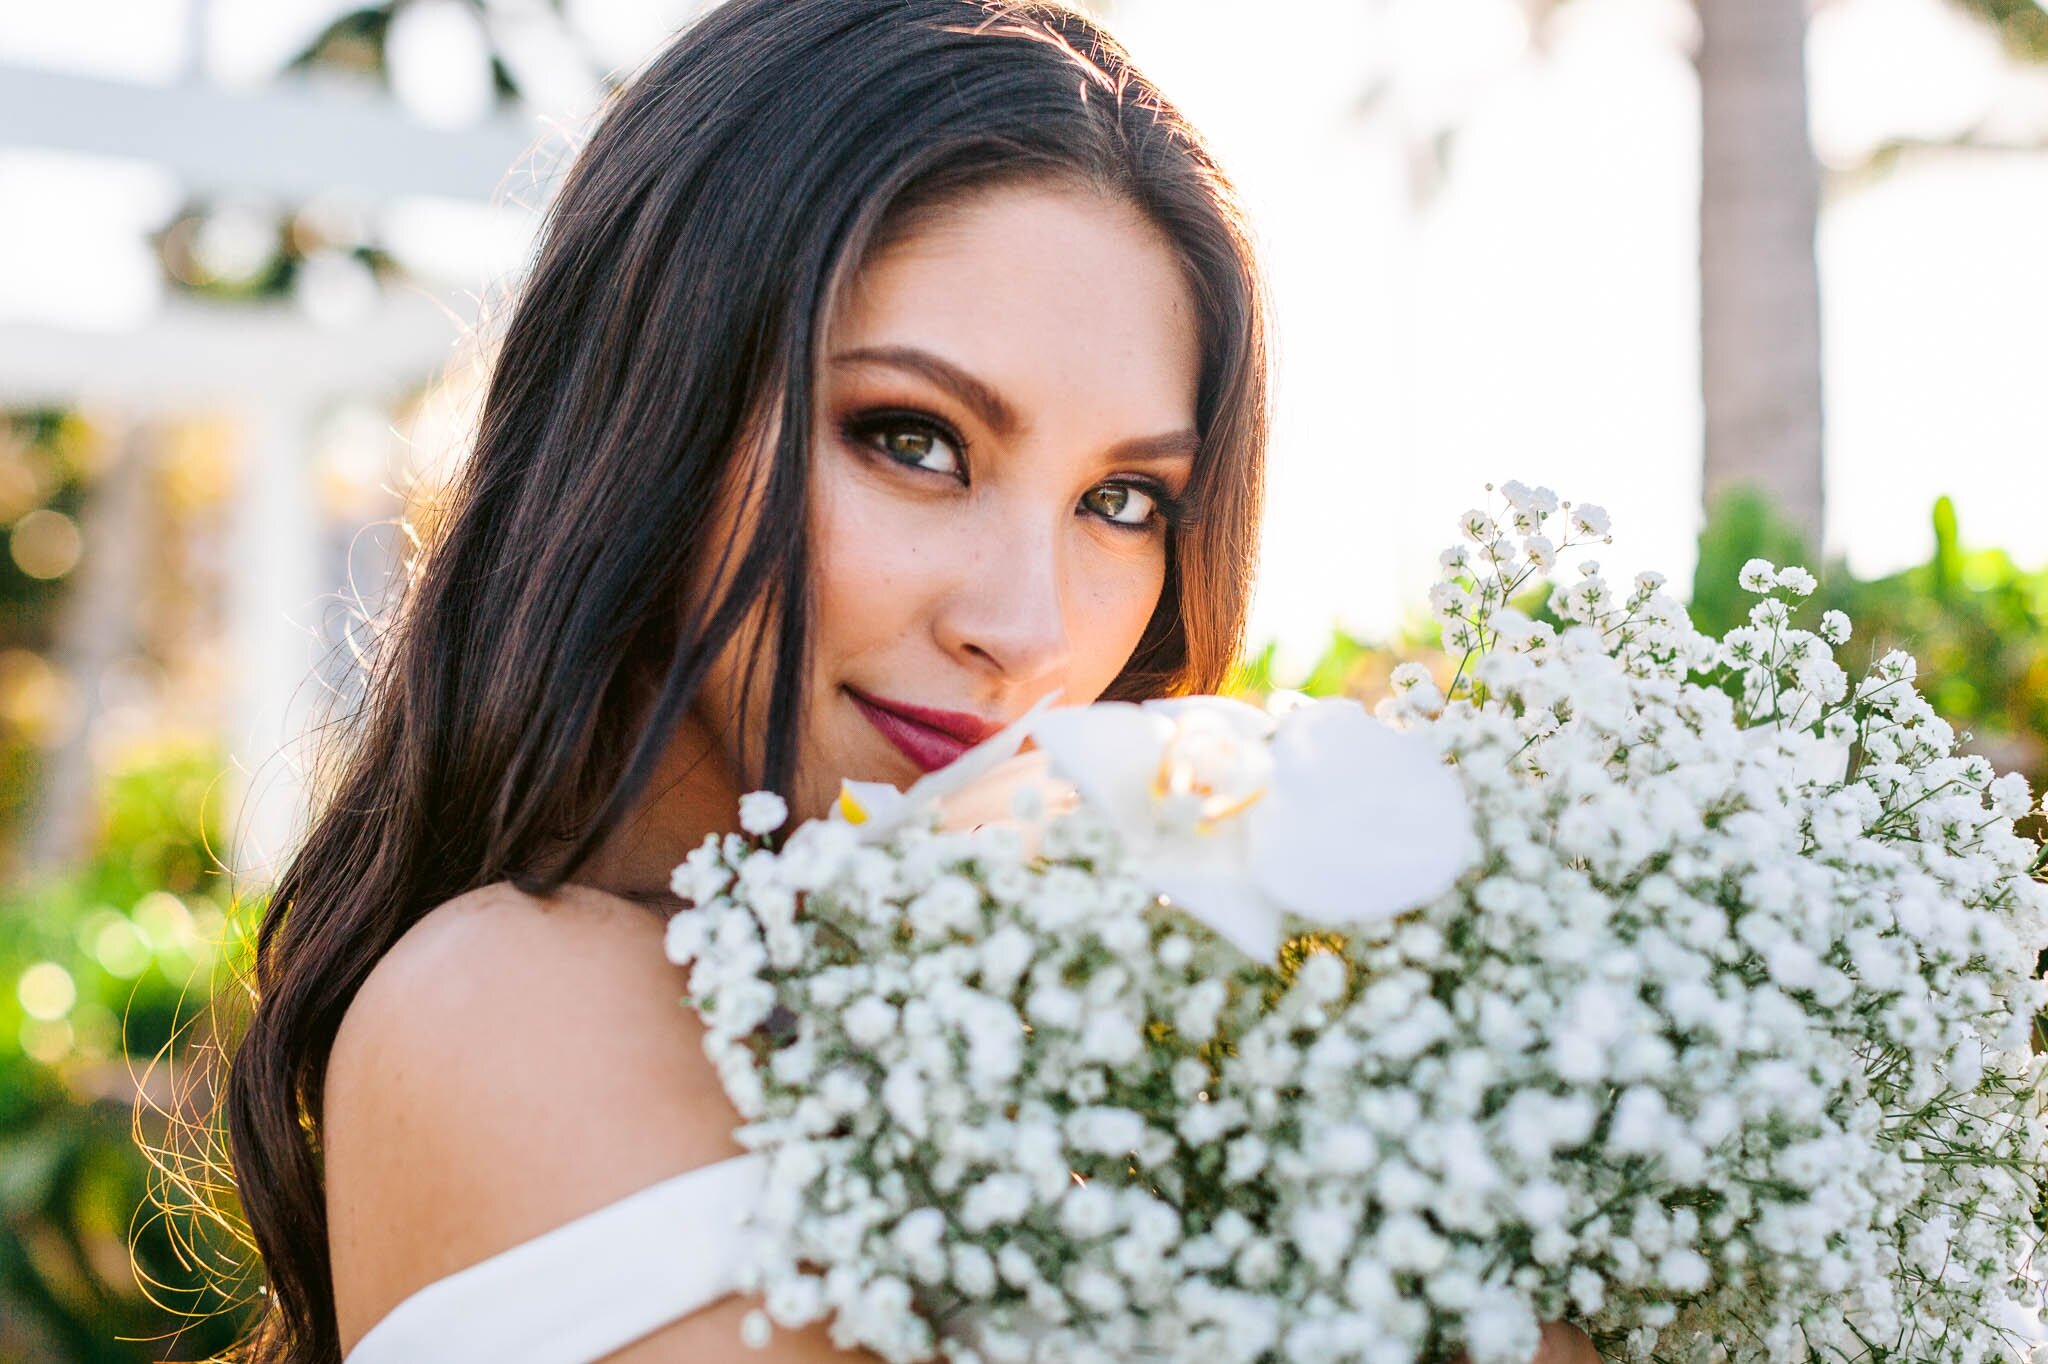 Bride with Flowers - Luxury Four Seasons Oahu at Ko Olina Wedding Inspiration - Kapolei, Hawaii Photographer 